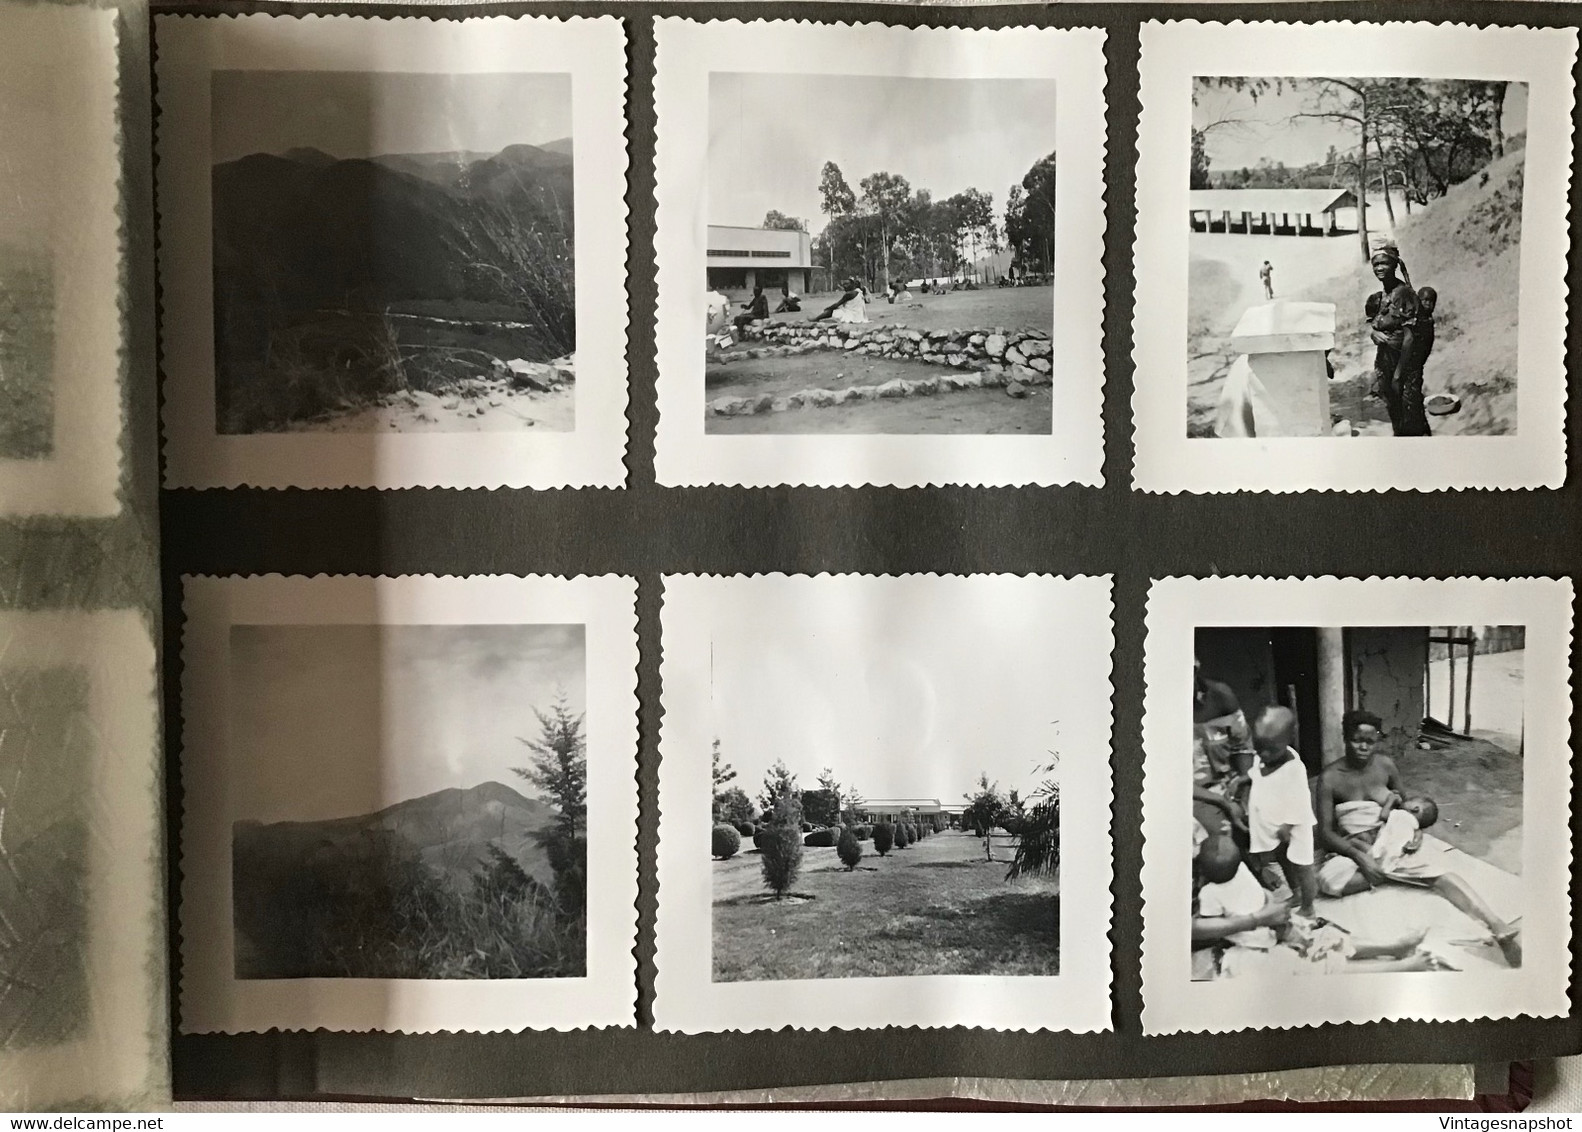 Congo Belge Sud Kivu Kalambo & région Album de 144 Snapshots vers 1940-1950